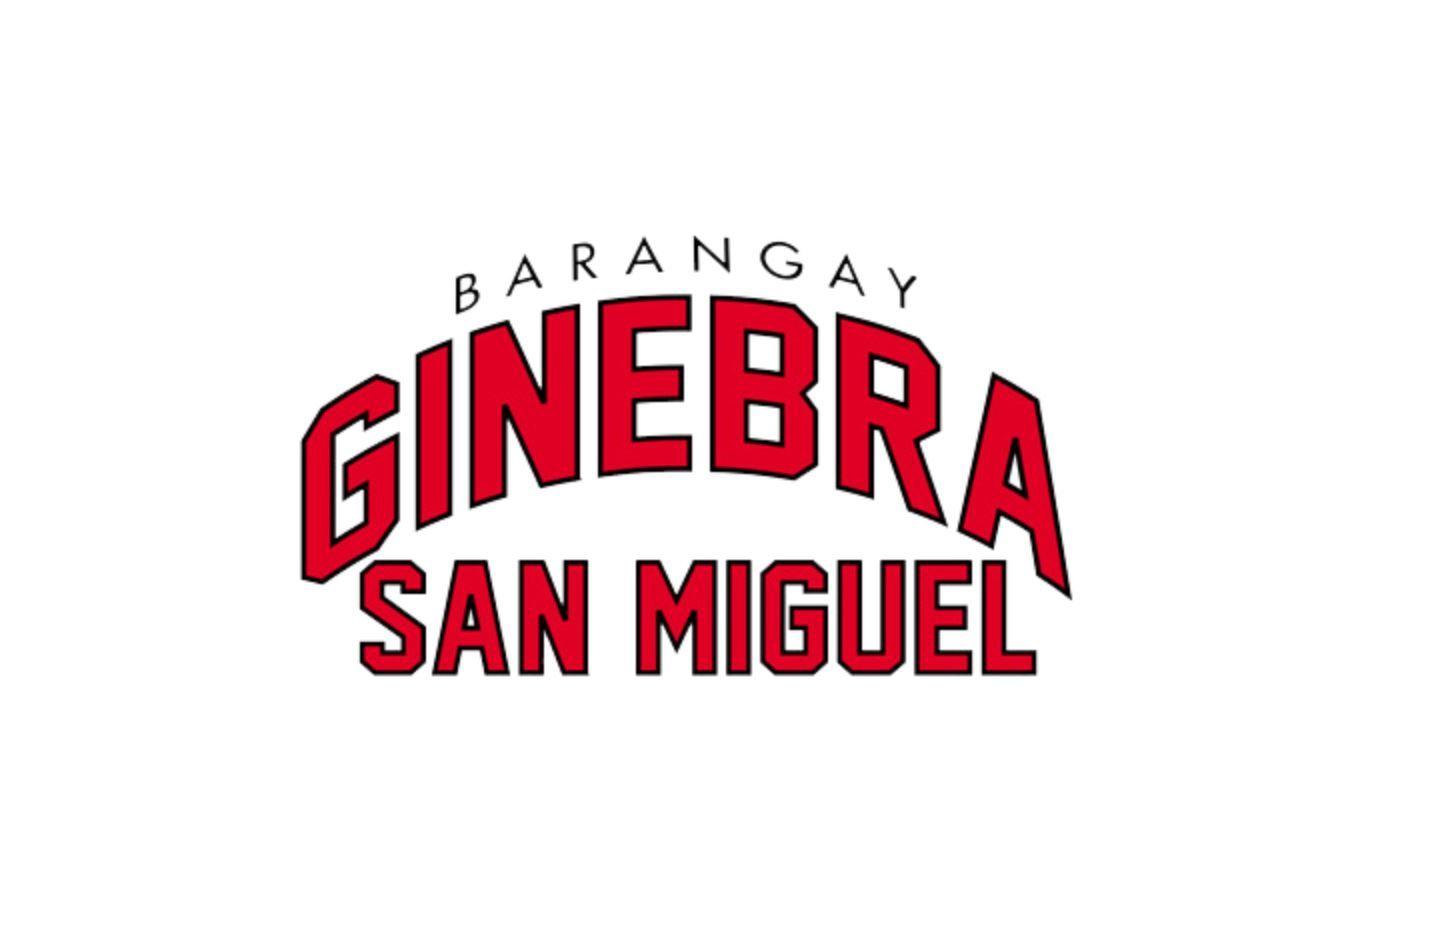 Ginebra Logo - Barangay ginebra logo png 5 » PNG Image